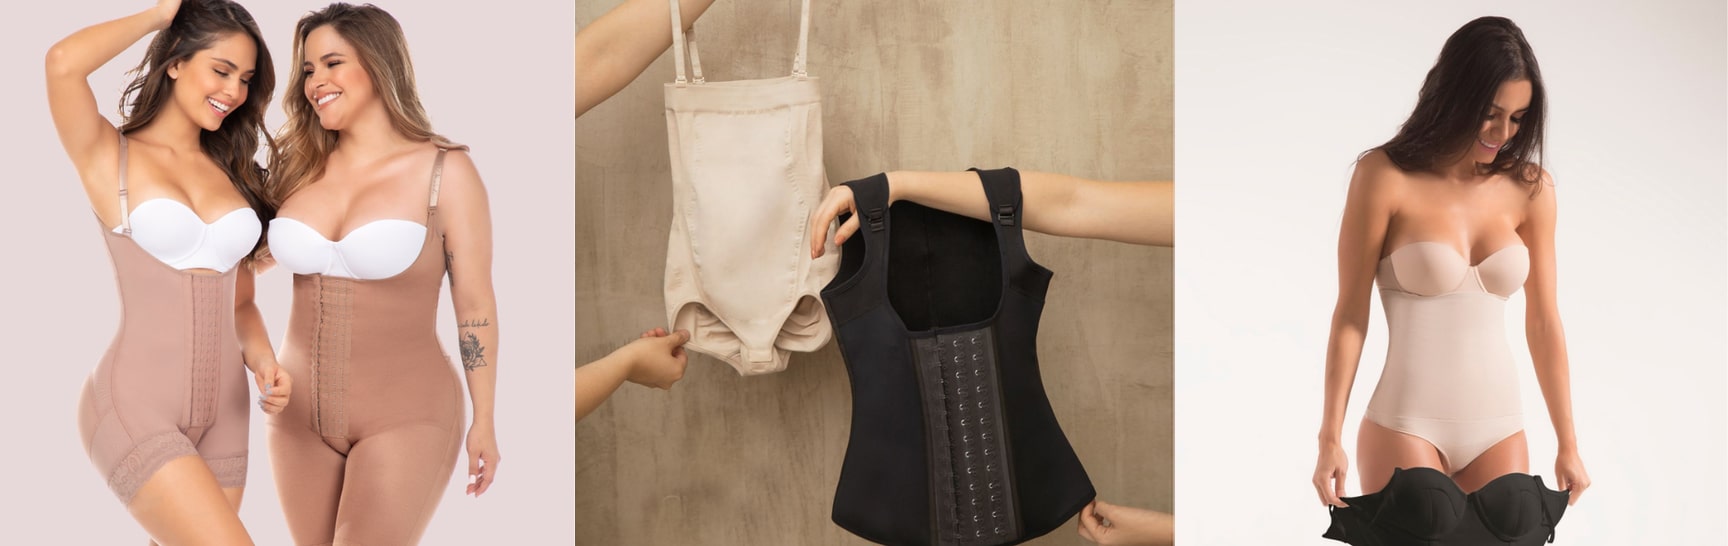 Postpartum shapewear : how to choose?